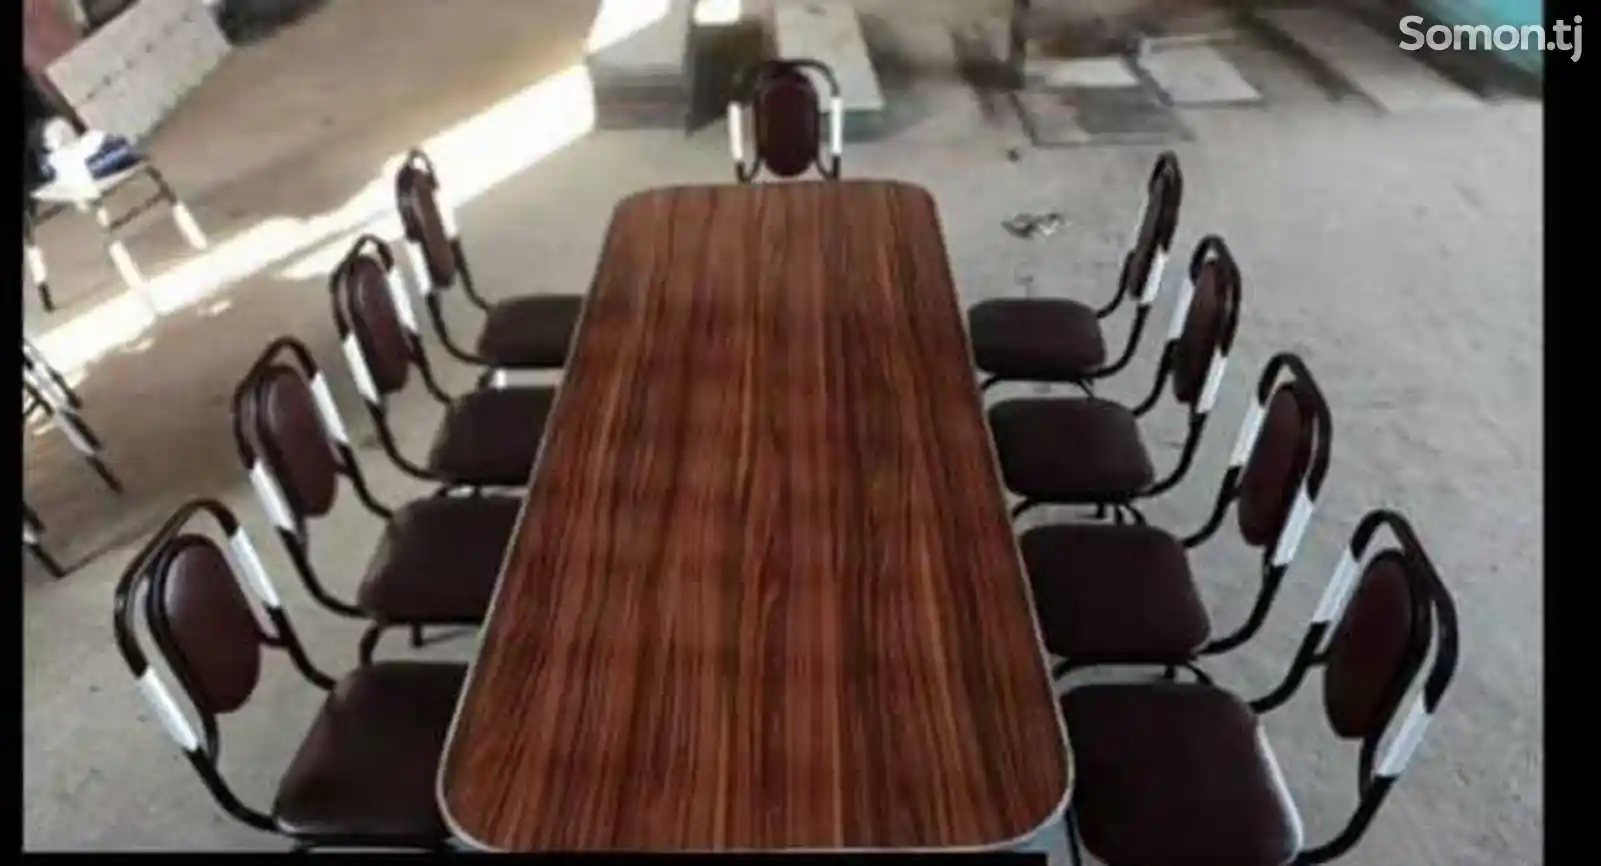 Стол со стульями